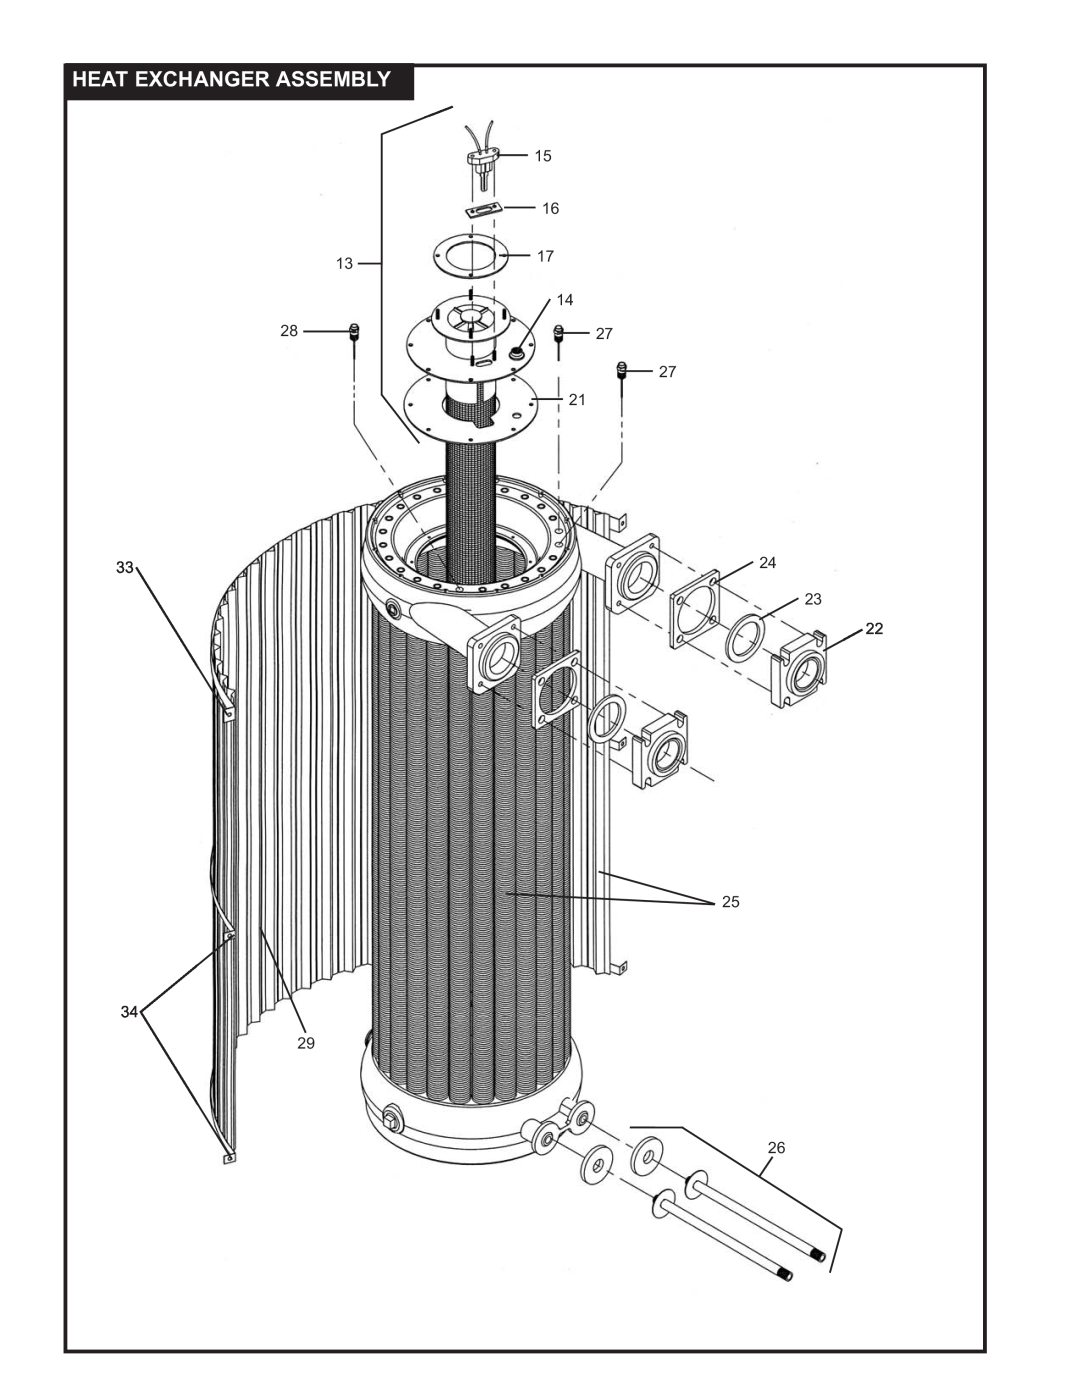 Lochinvar PFR-06 manual Heat Exchanger Assembly 